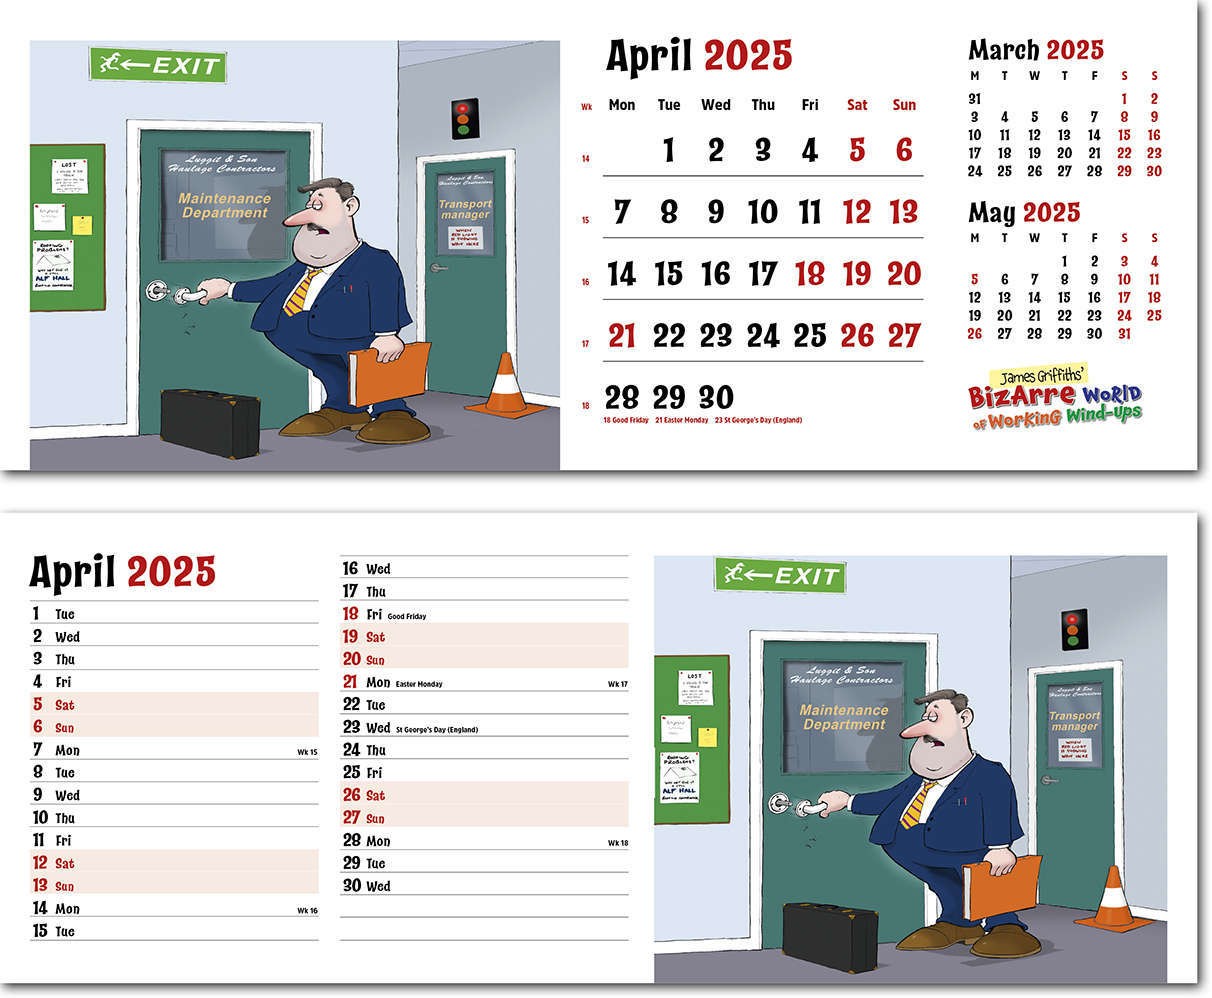 Bizarre World of Working Wind Ups Note Station Desk Calendar